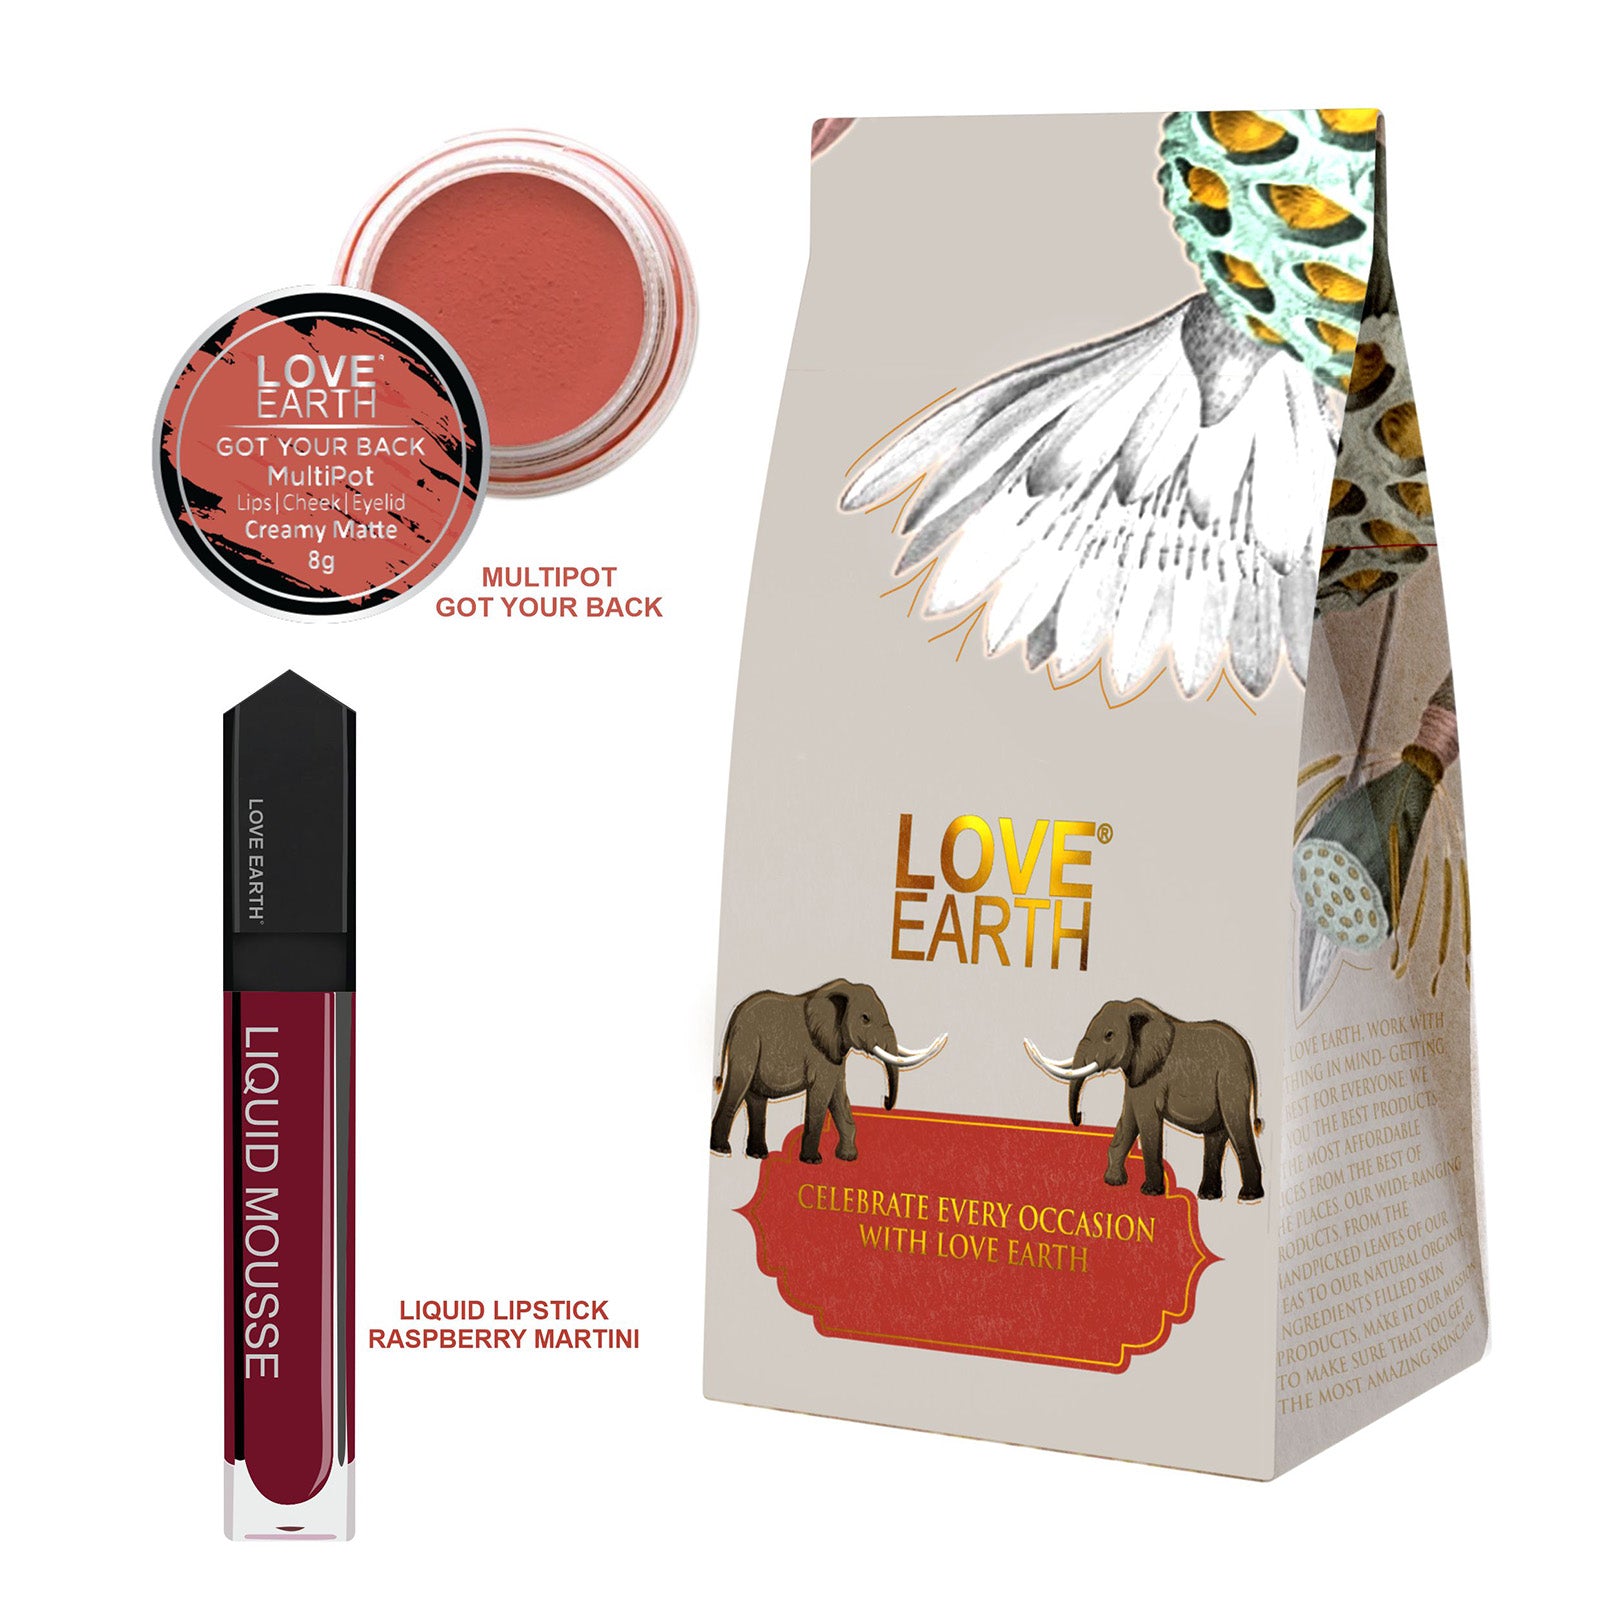 Lip And Cheek Tint Got Your Back & Liquid Lipstick Raspberry Martini Gift Pack